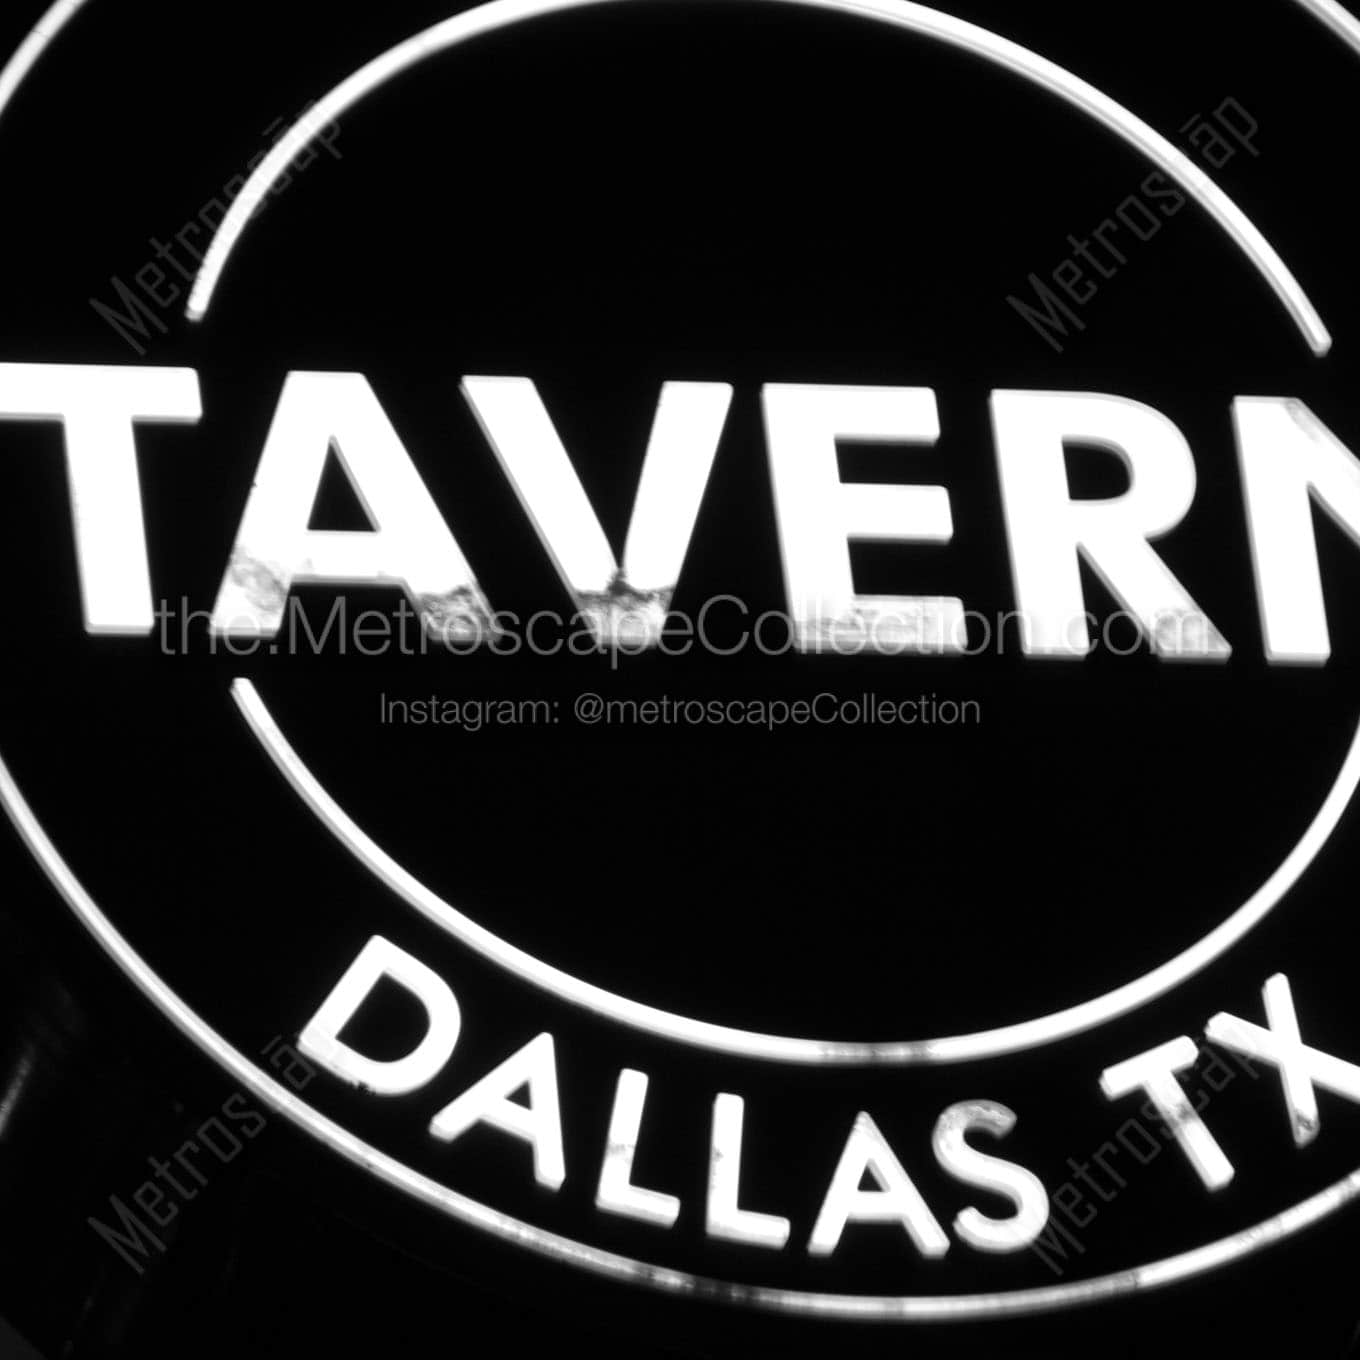 dallas texas tavern Black & White Wall Art